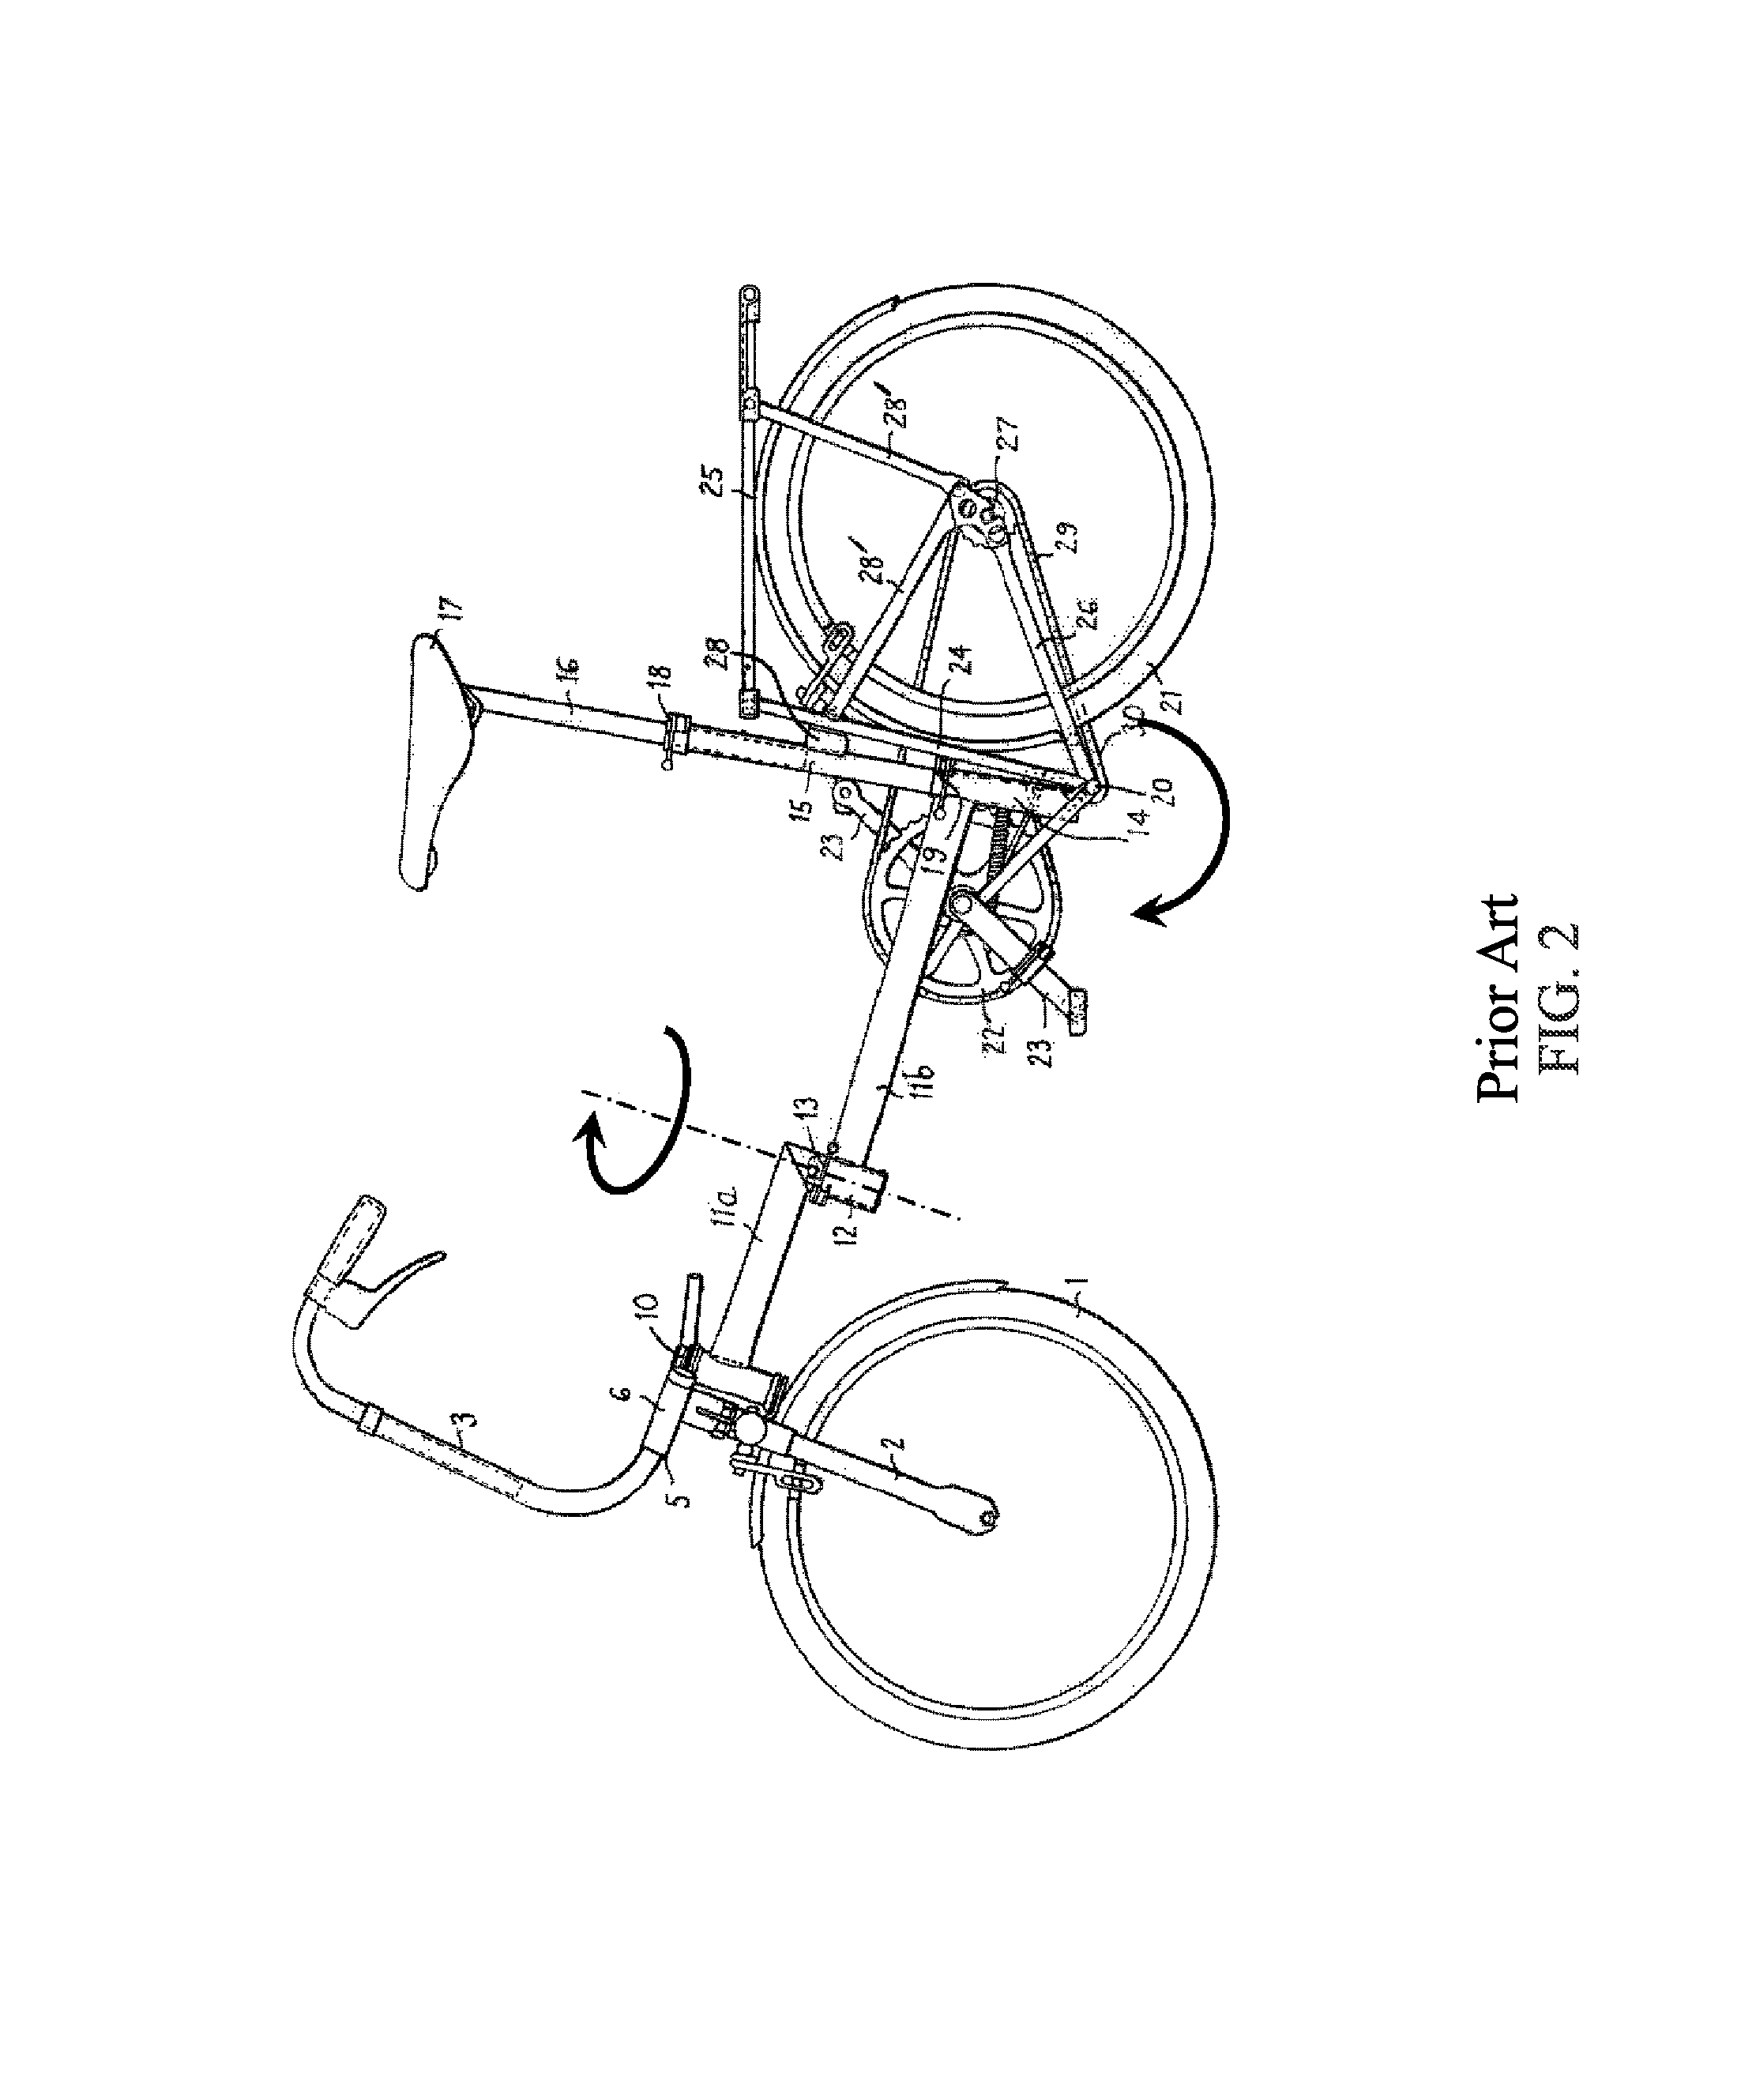 Folding bicycle assembly